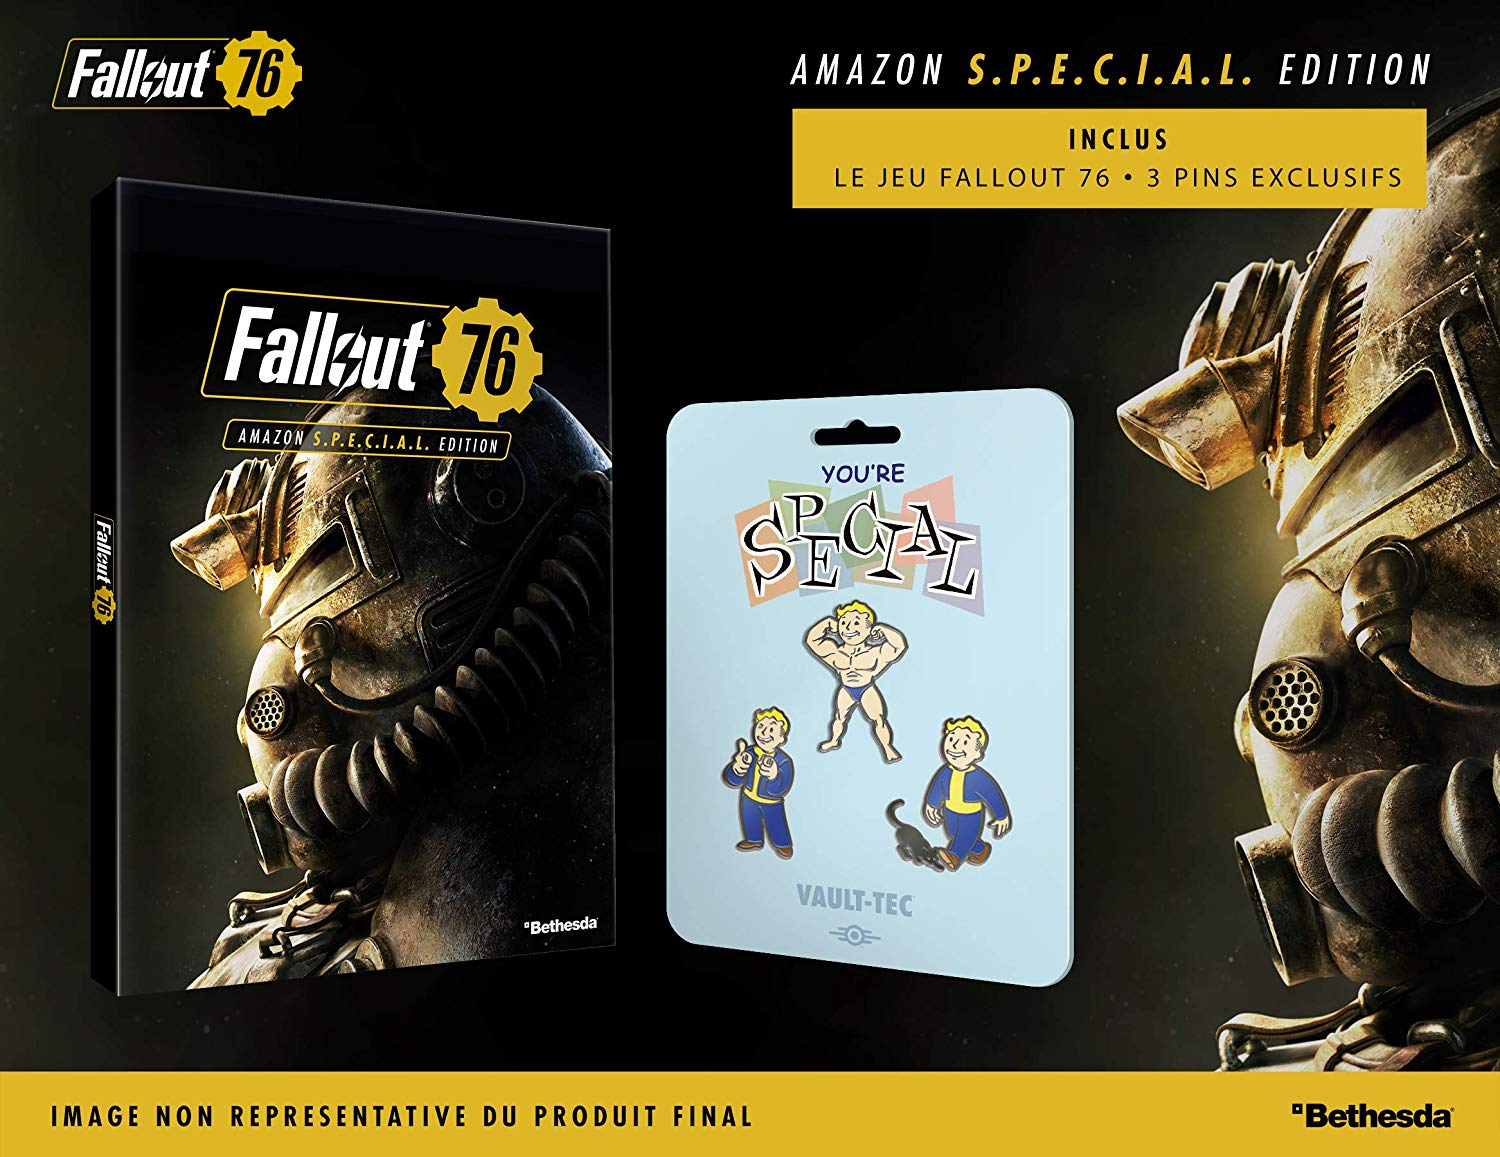 Fallout 76 - Amazon S.P.E.C.I.A.L édition